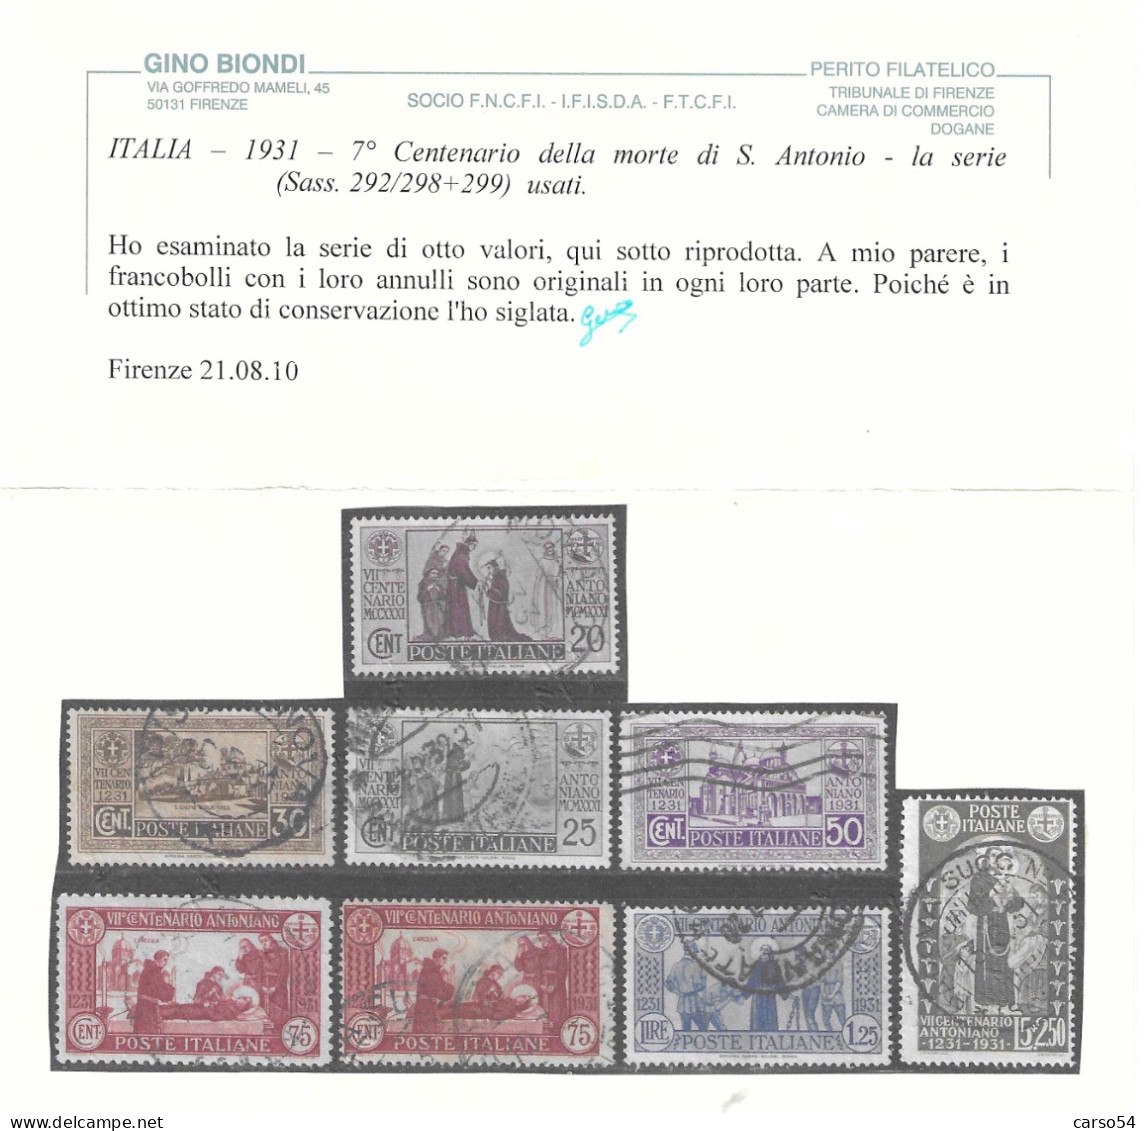 1931 - 7^ CENTENARIO MORTE S.ANTONIO SERIE DI 7 VALORI USATI  - SASSONE EURO 1.300 - Used